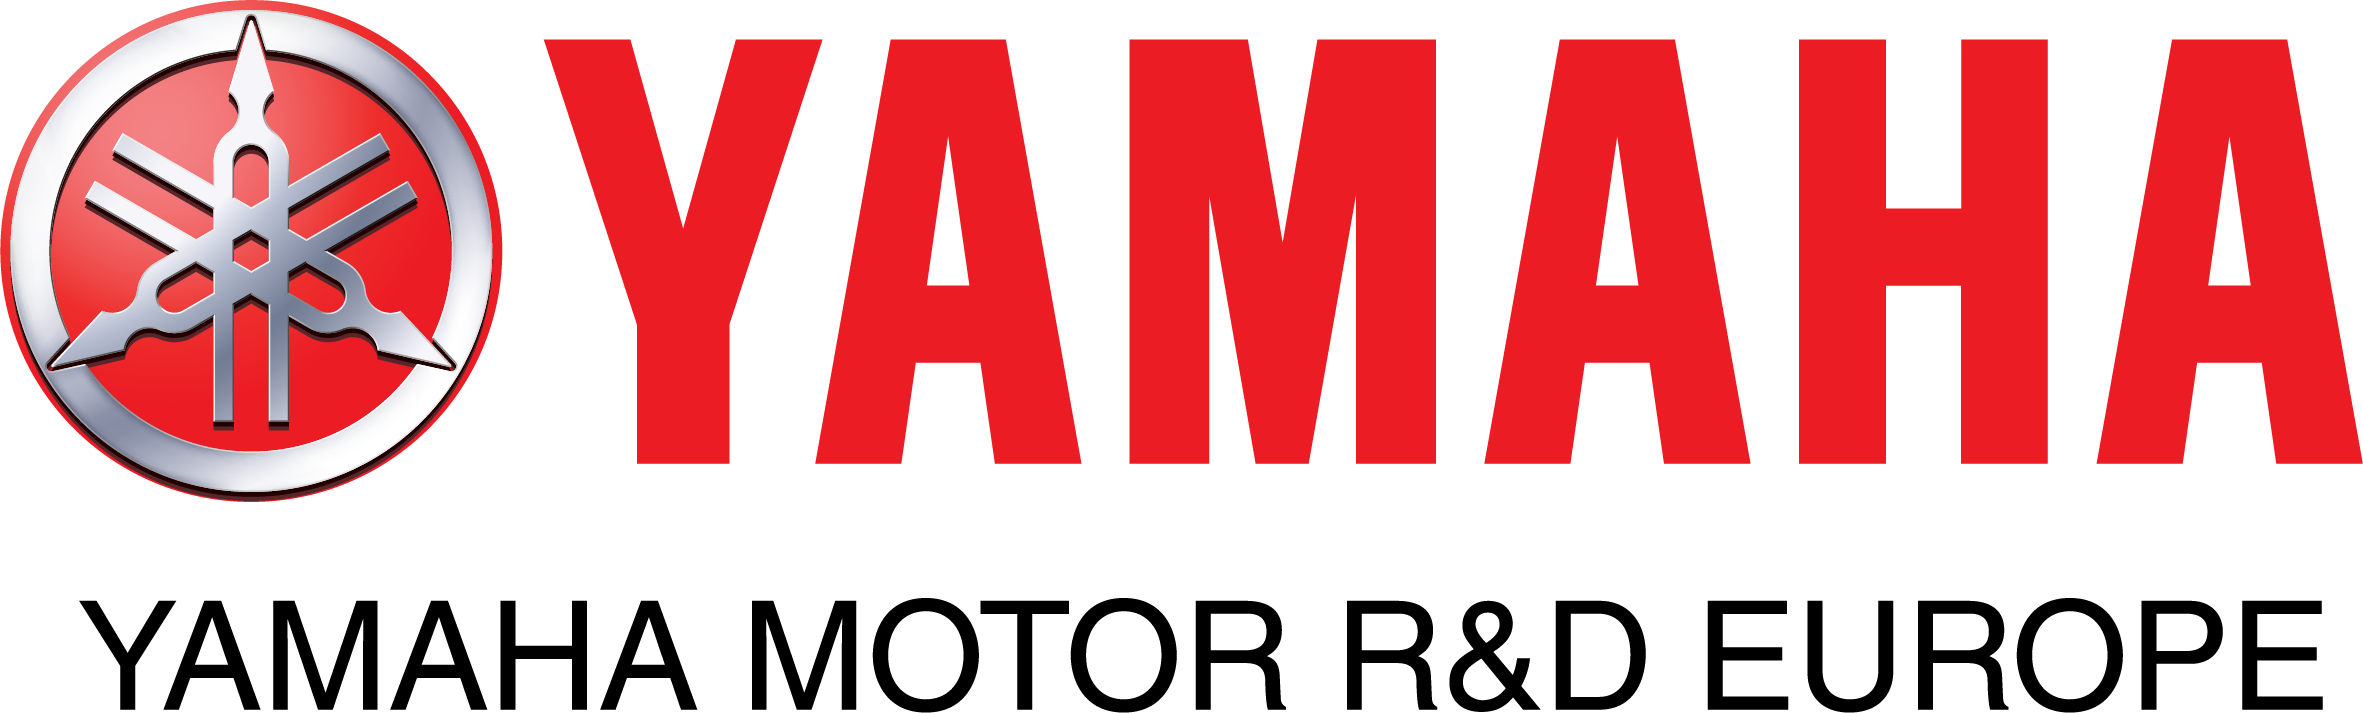 Logo Yamaha Motor Europe R&D